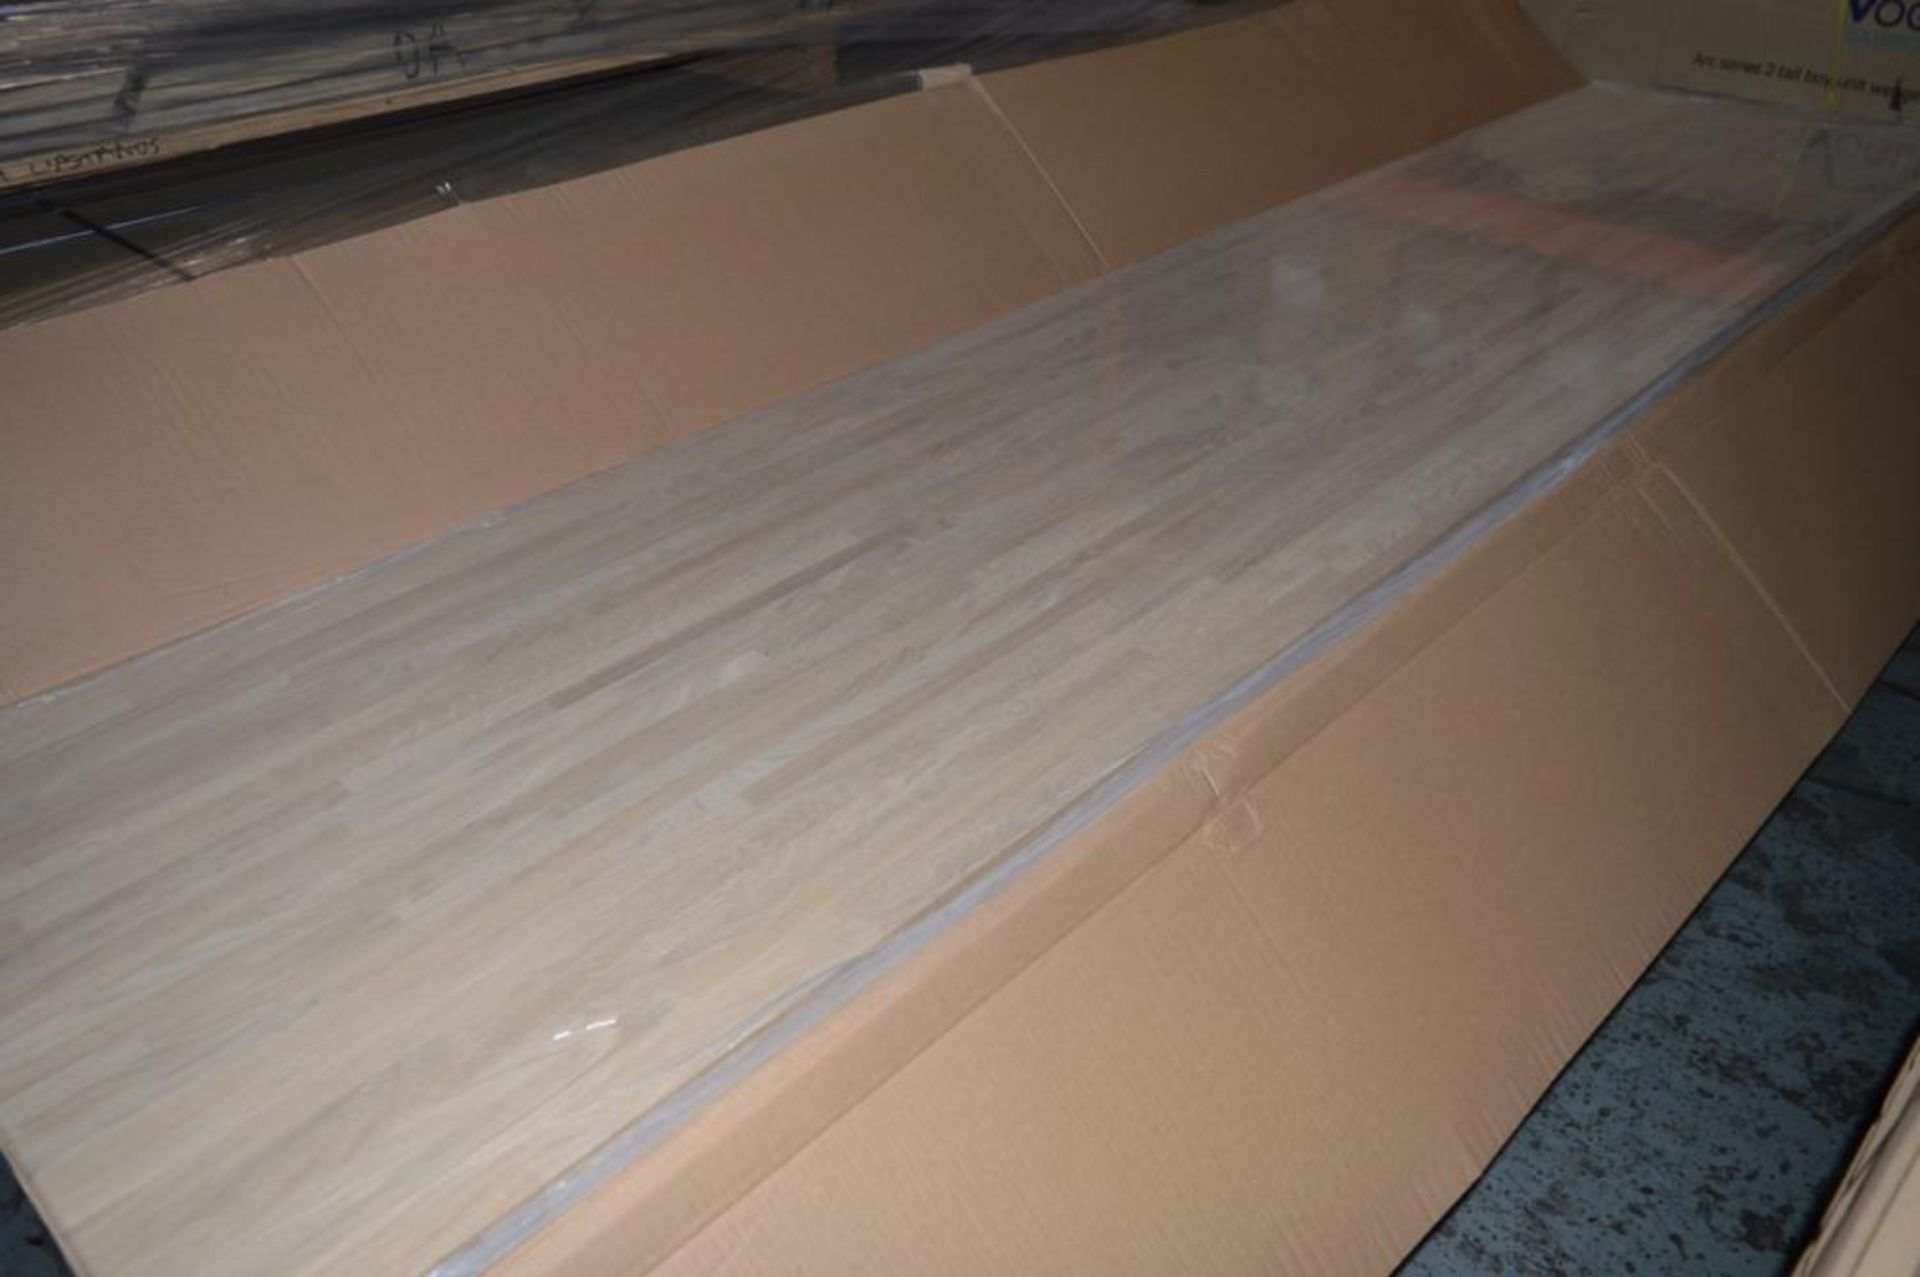 1 x Solid Wood Kitchen Worktop - OAK - Oak Blockwood Kitchen Worktop - Size: 3000 x 900 x 32mm - - Image 2 of 4